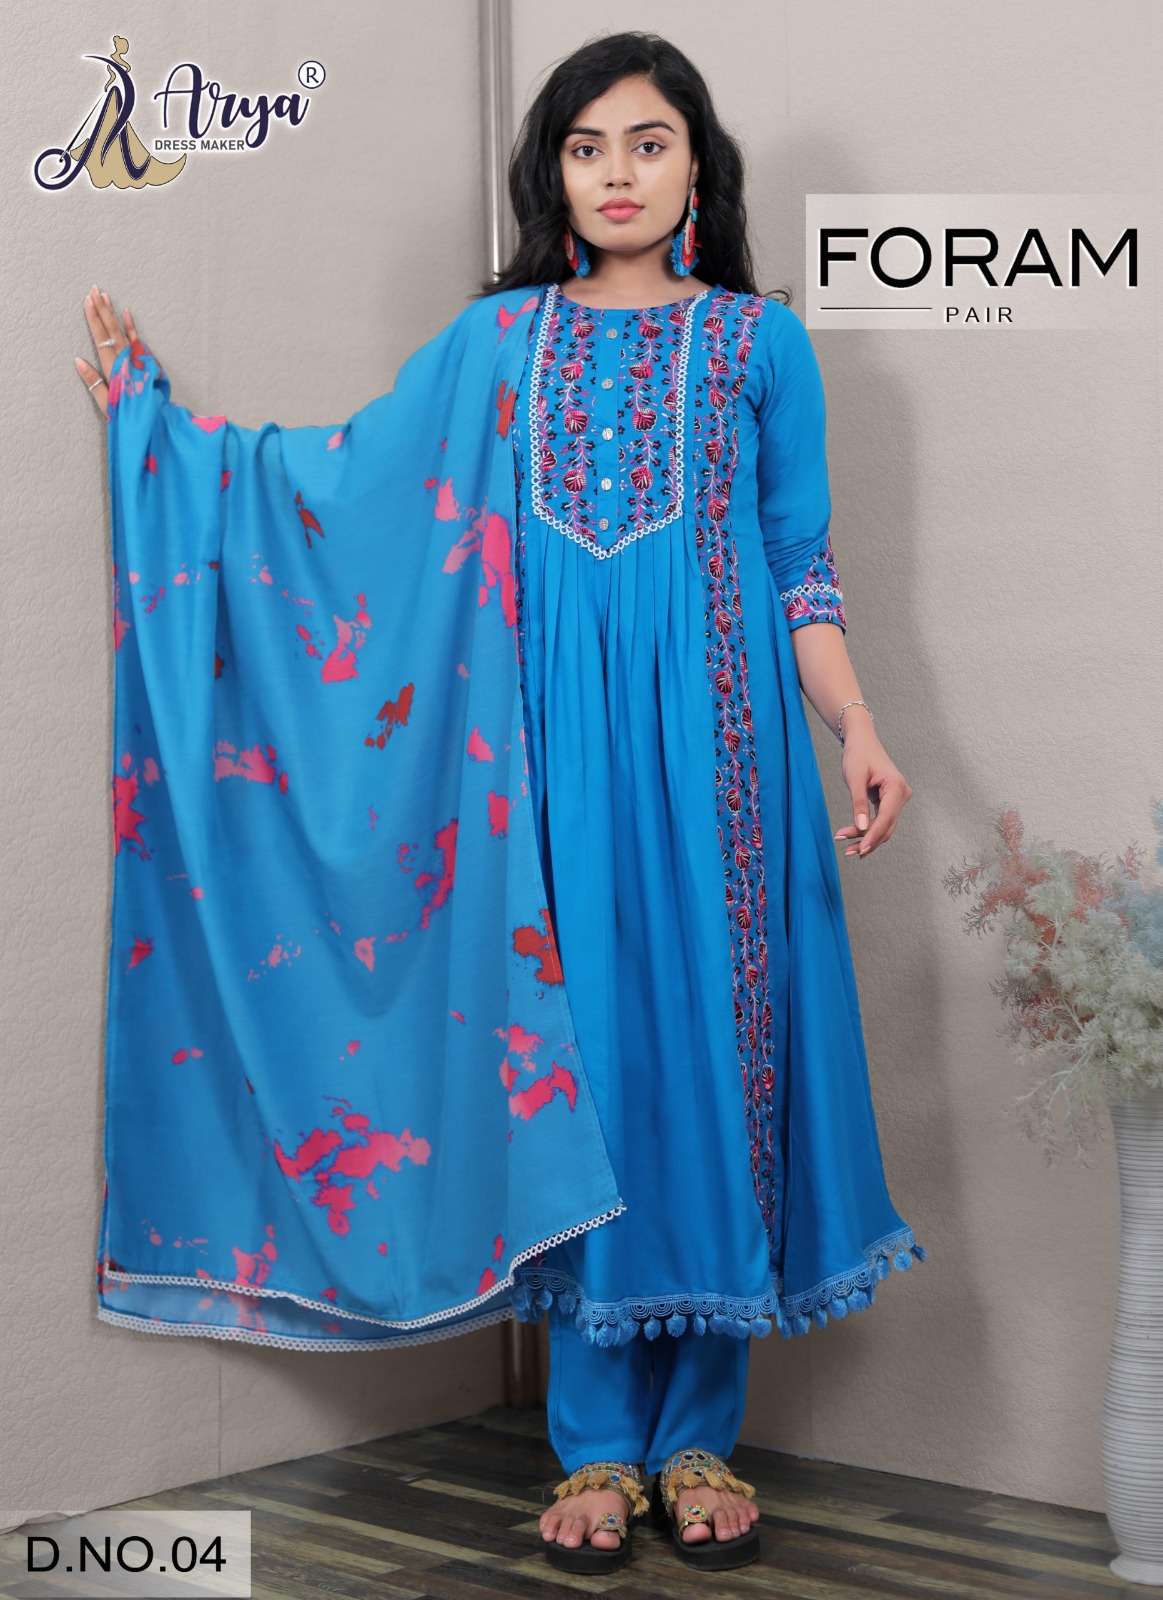 FORAM BY ARYA DRESS MAKER 01 TO 04 SERIES DESIGNER COTTON DRESSES